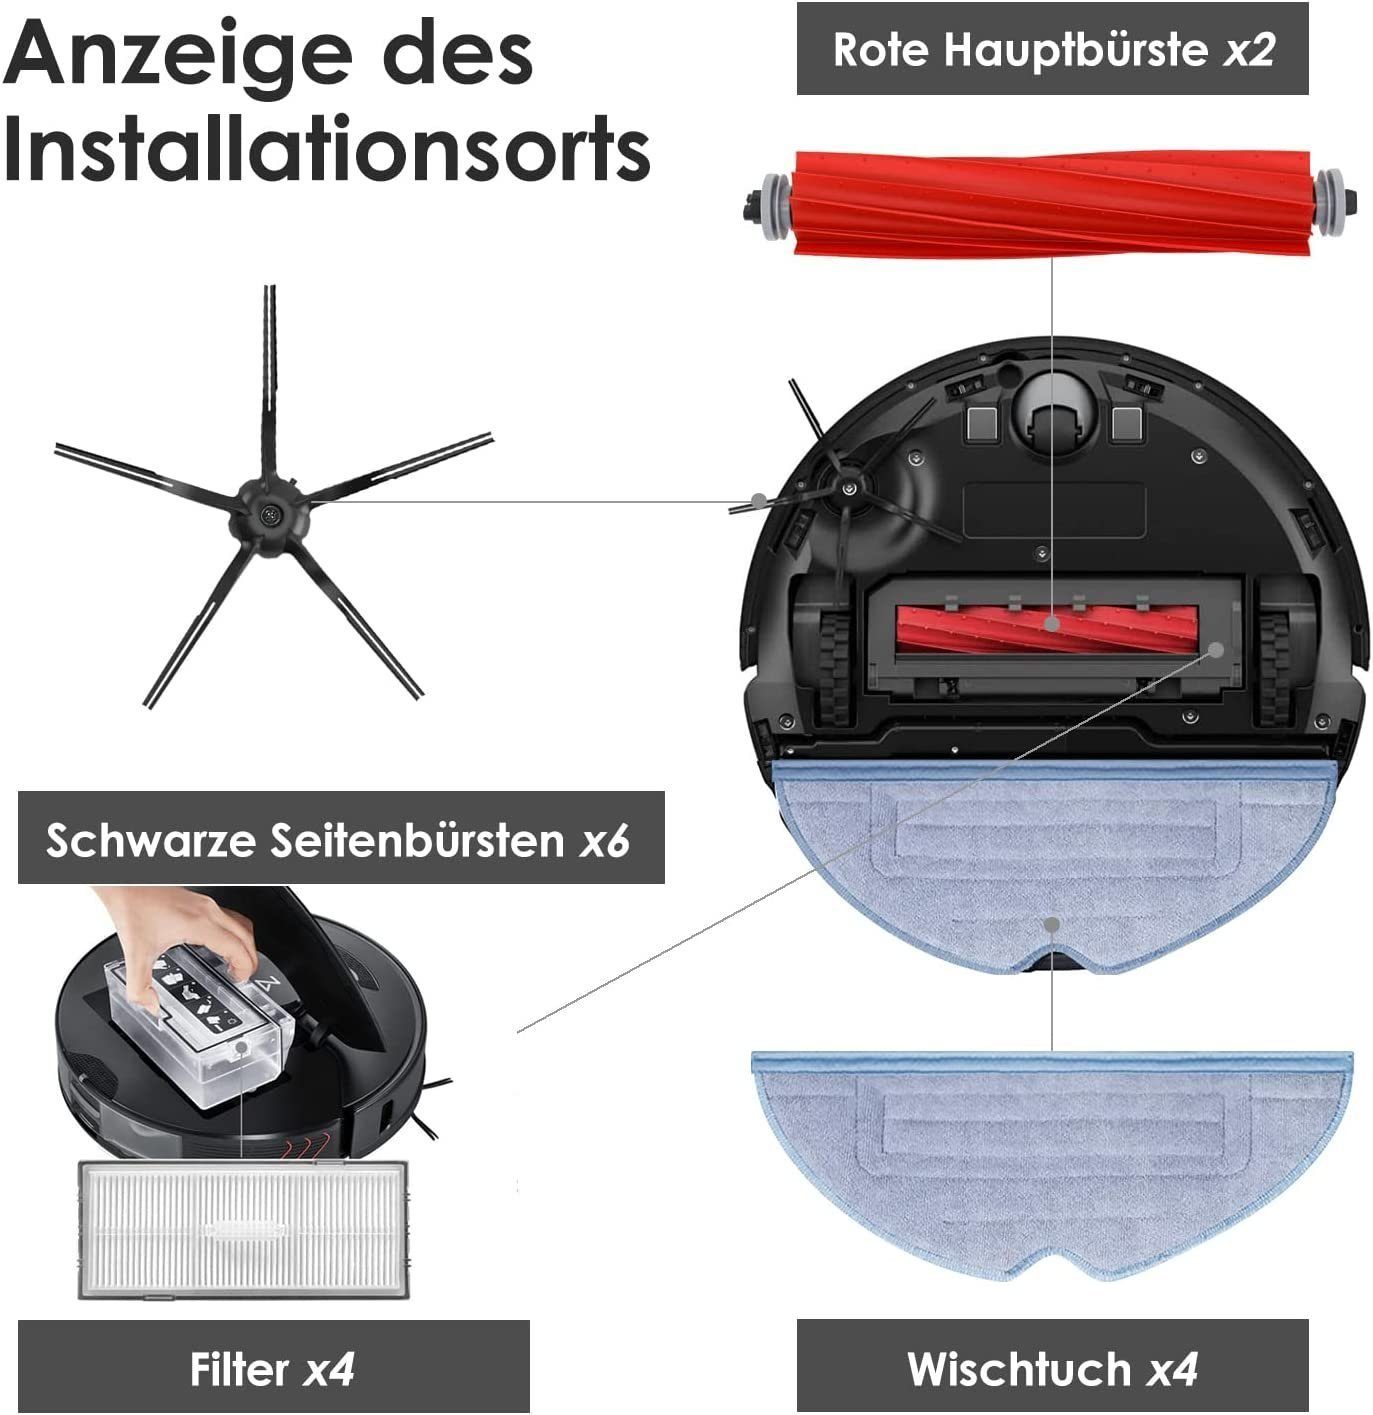 S7 S7 für Pro Staubsaugerdüsen-Set Ultra/ Ersatzteile XDOVET MaxV Roborock Zubehörset Saugroboter